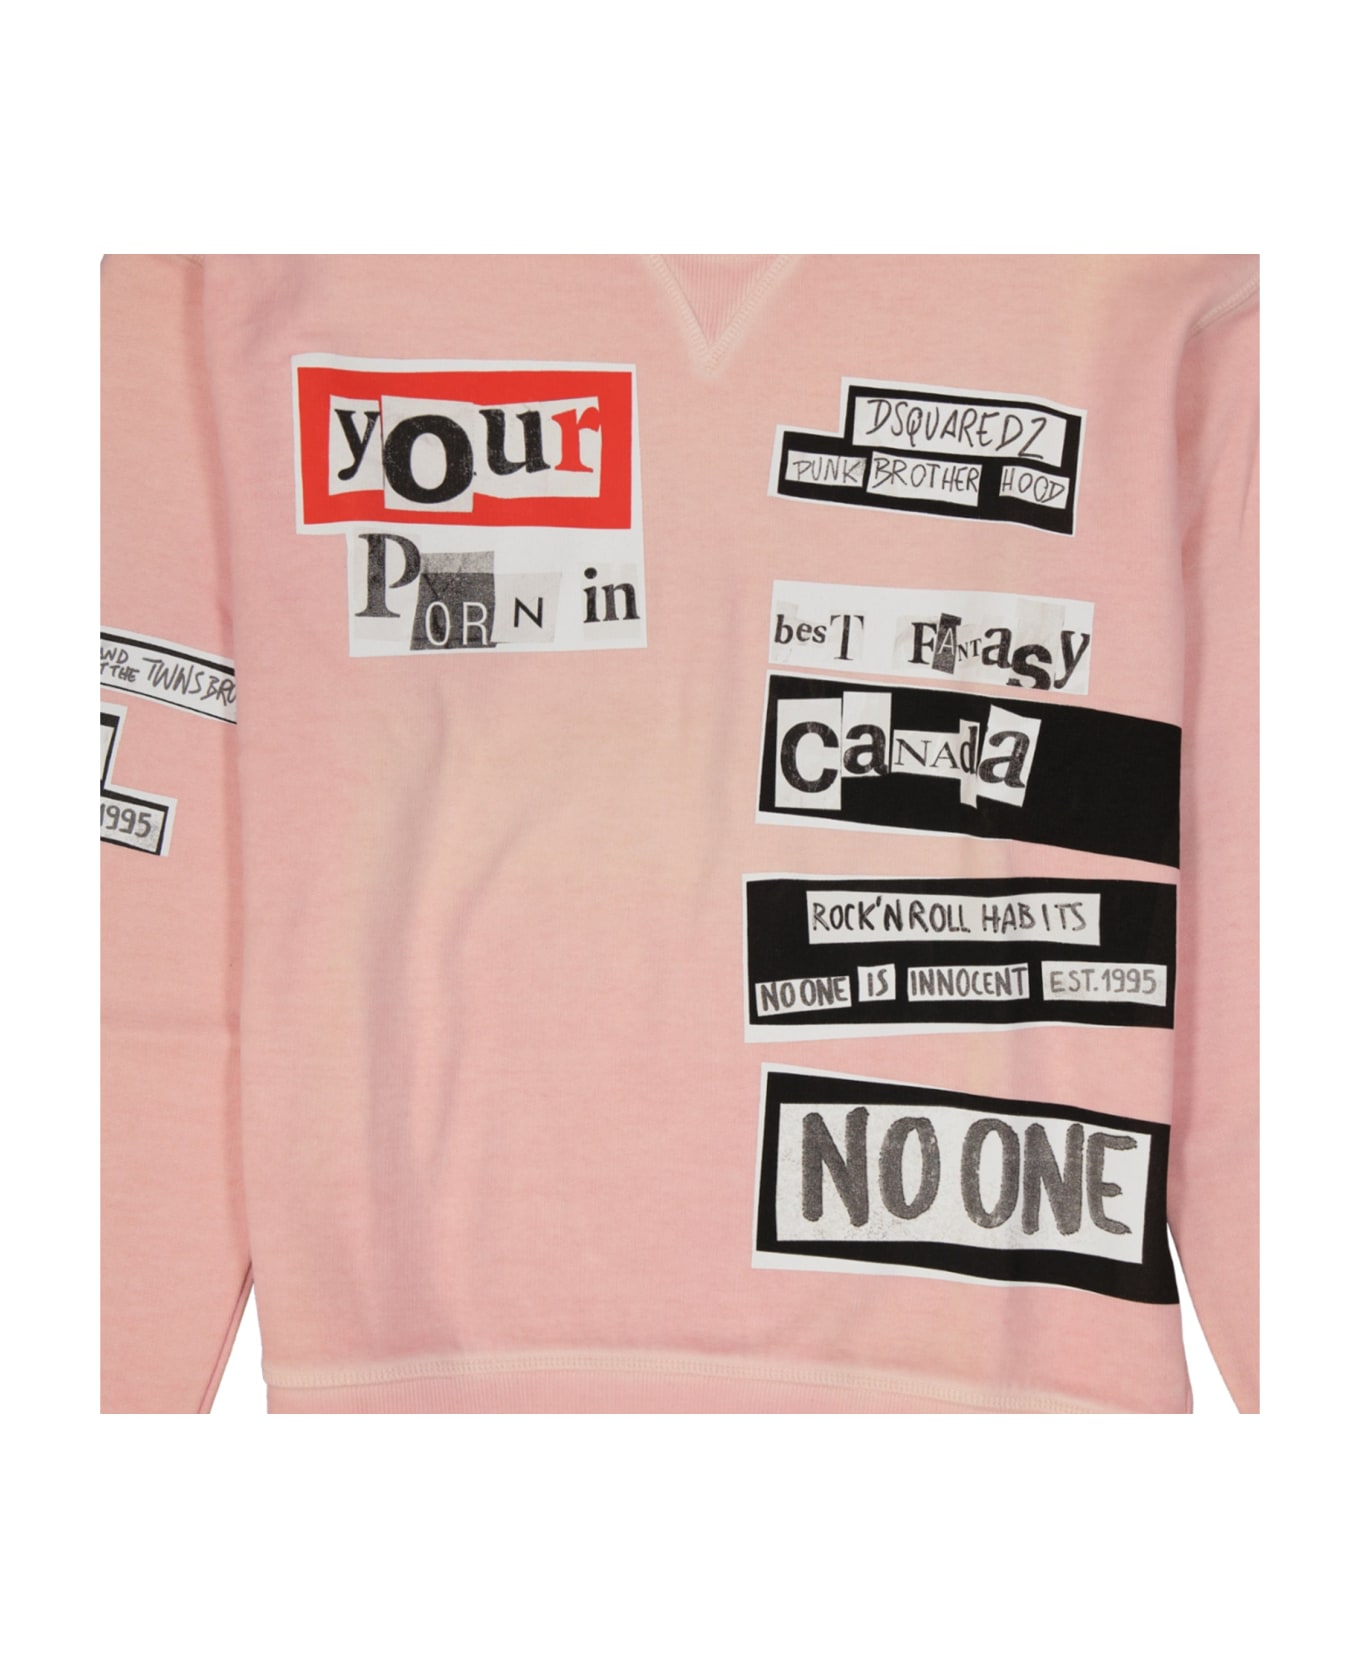 Dsquared2 Cotton Printed Sweatshirt - Pink